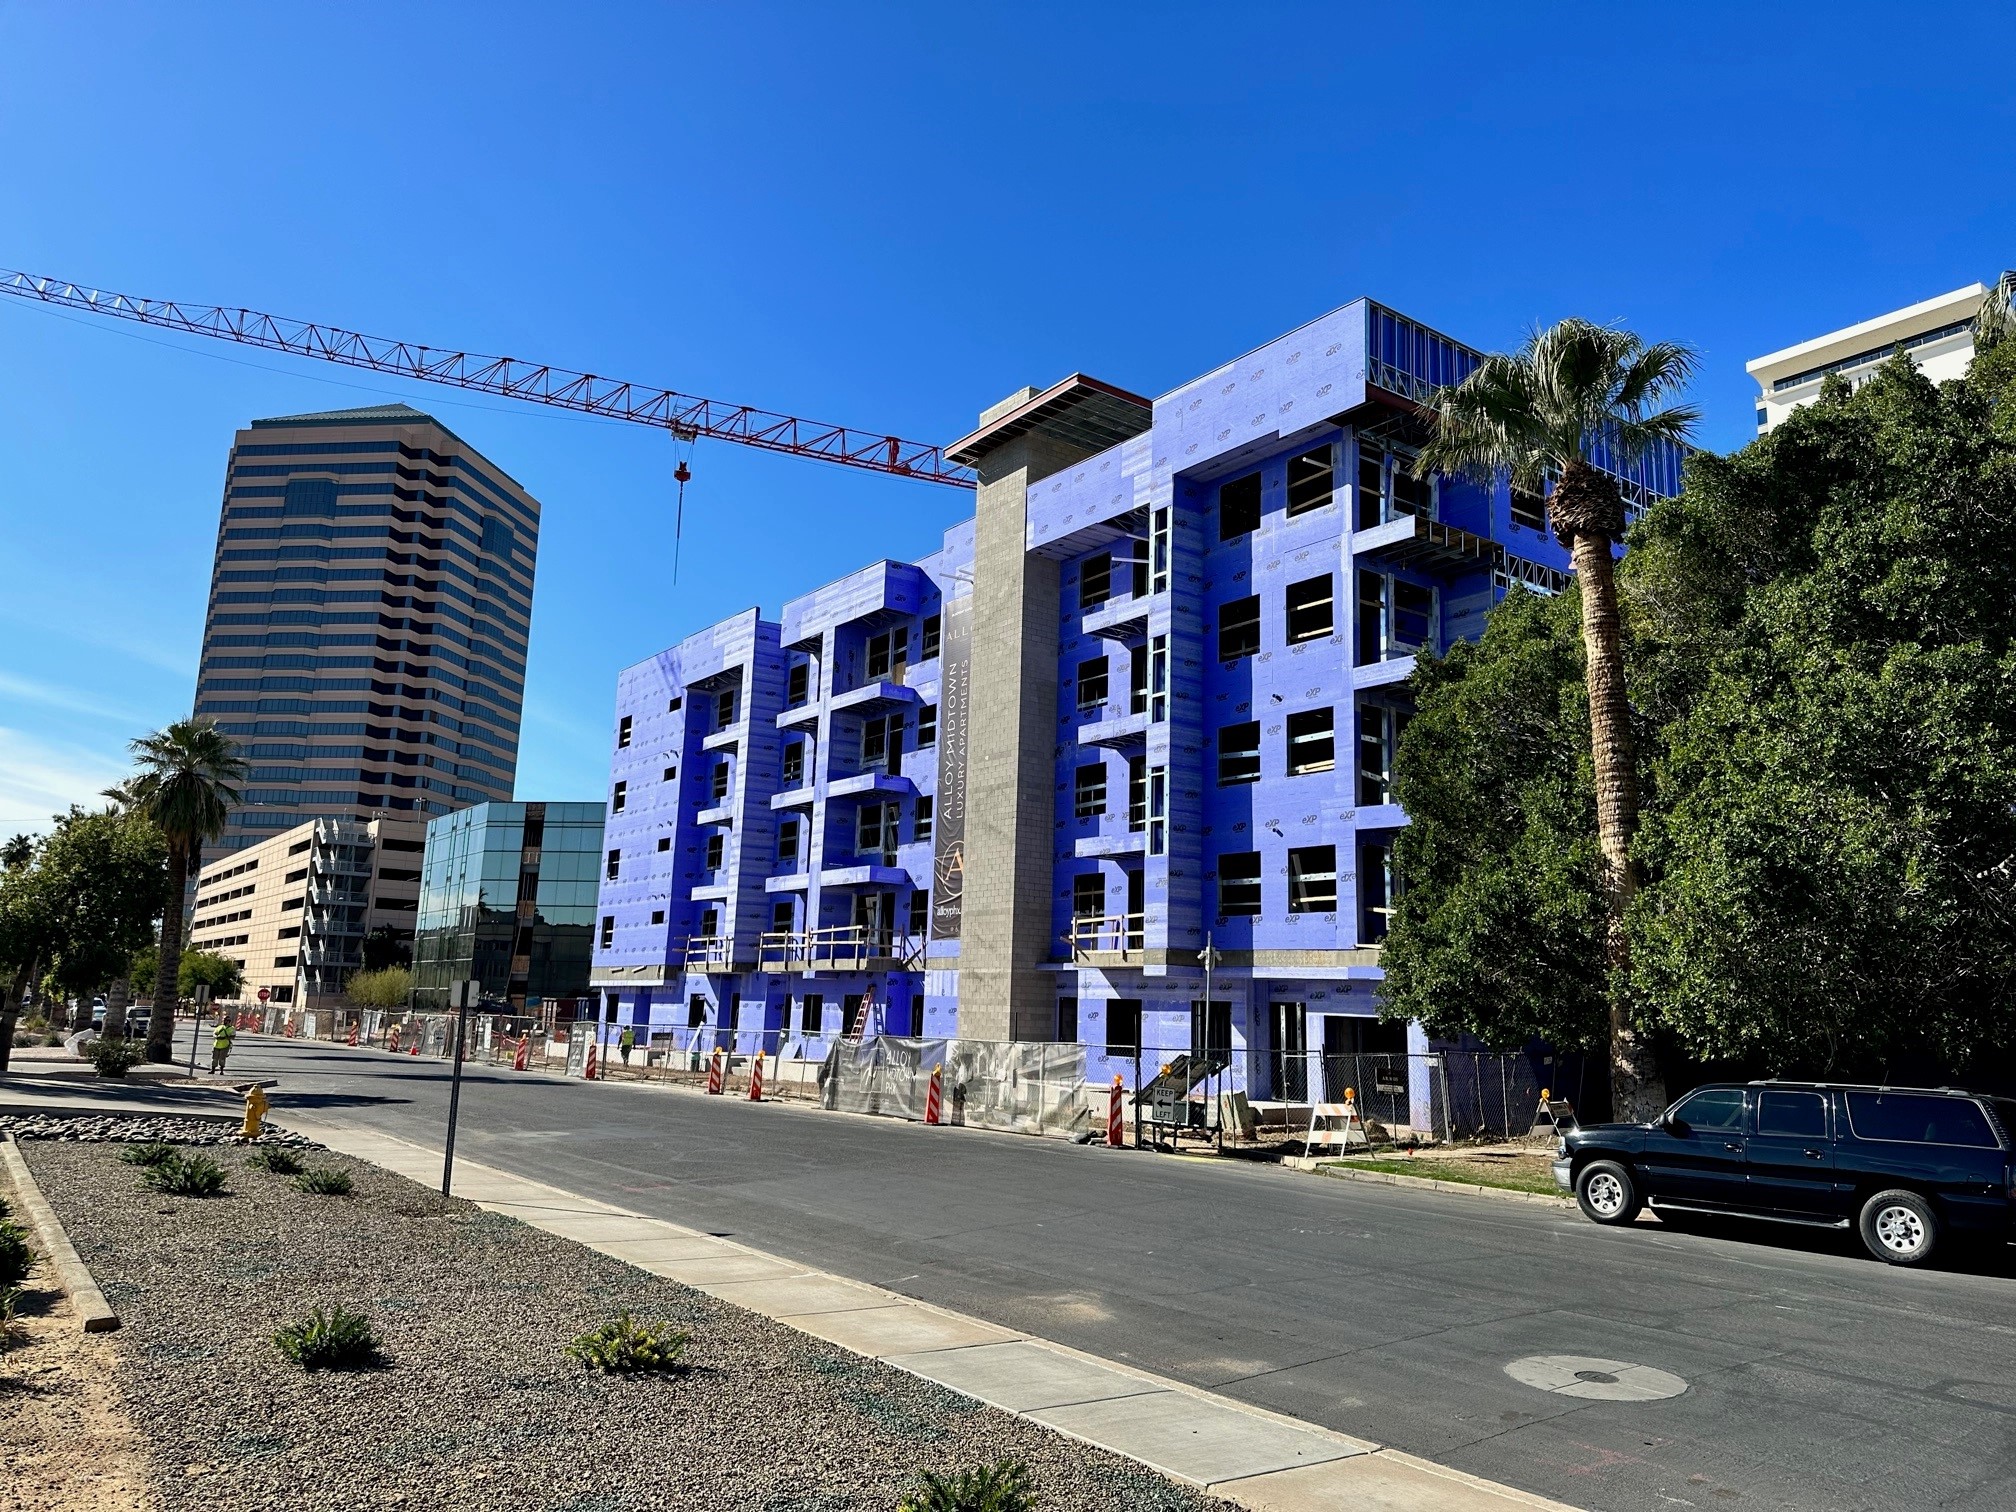 Office to residential conversion in-progress, Pheonix, Arizona